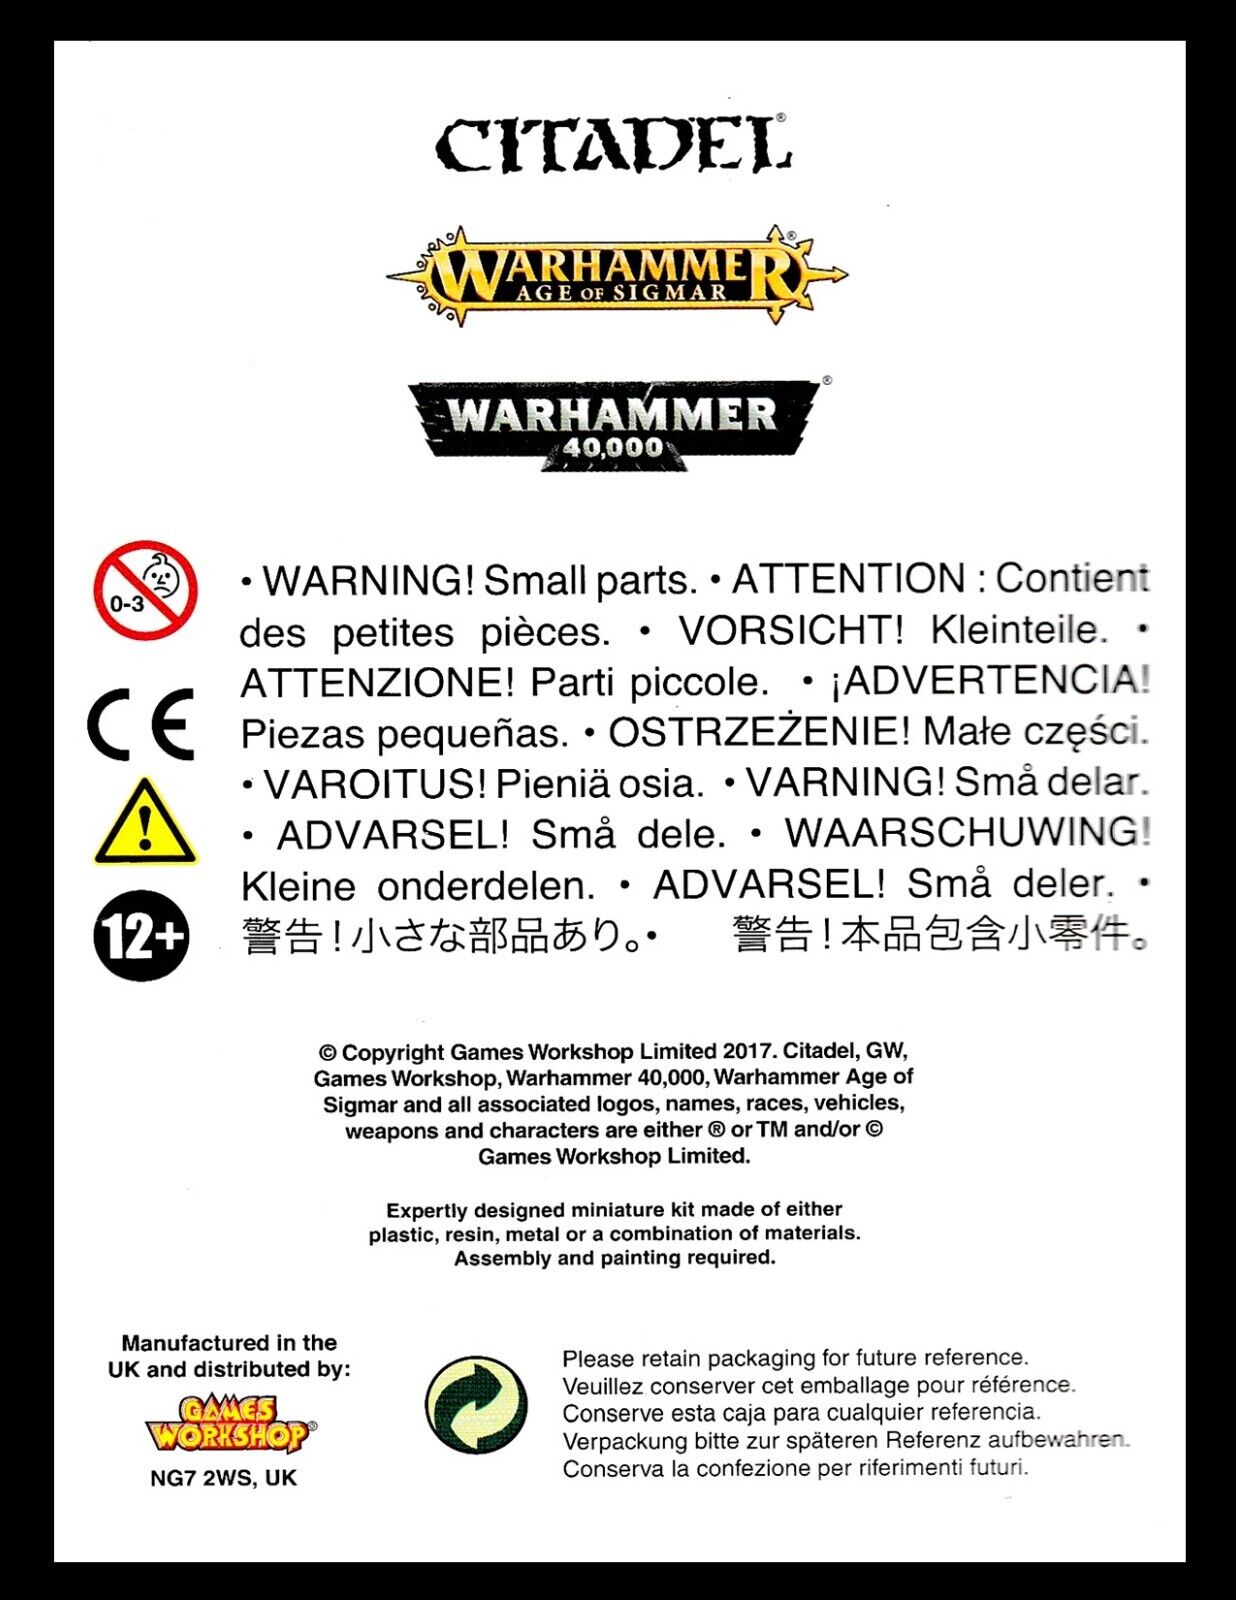 Screamers Chaos Daemons Of Tzeentch Warhammer 40K Age of Sigmar NIB!     WBGames